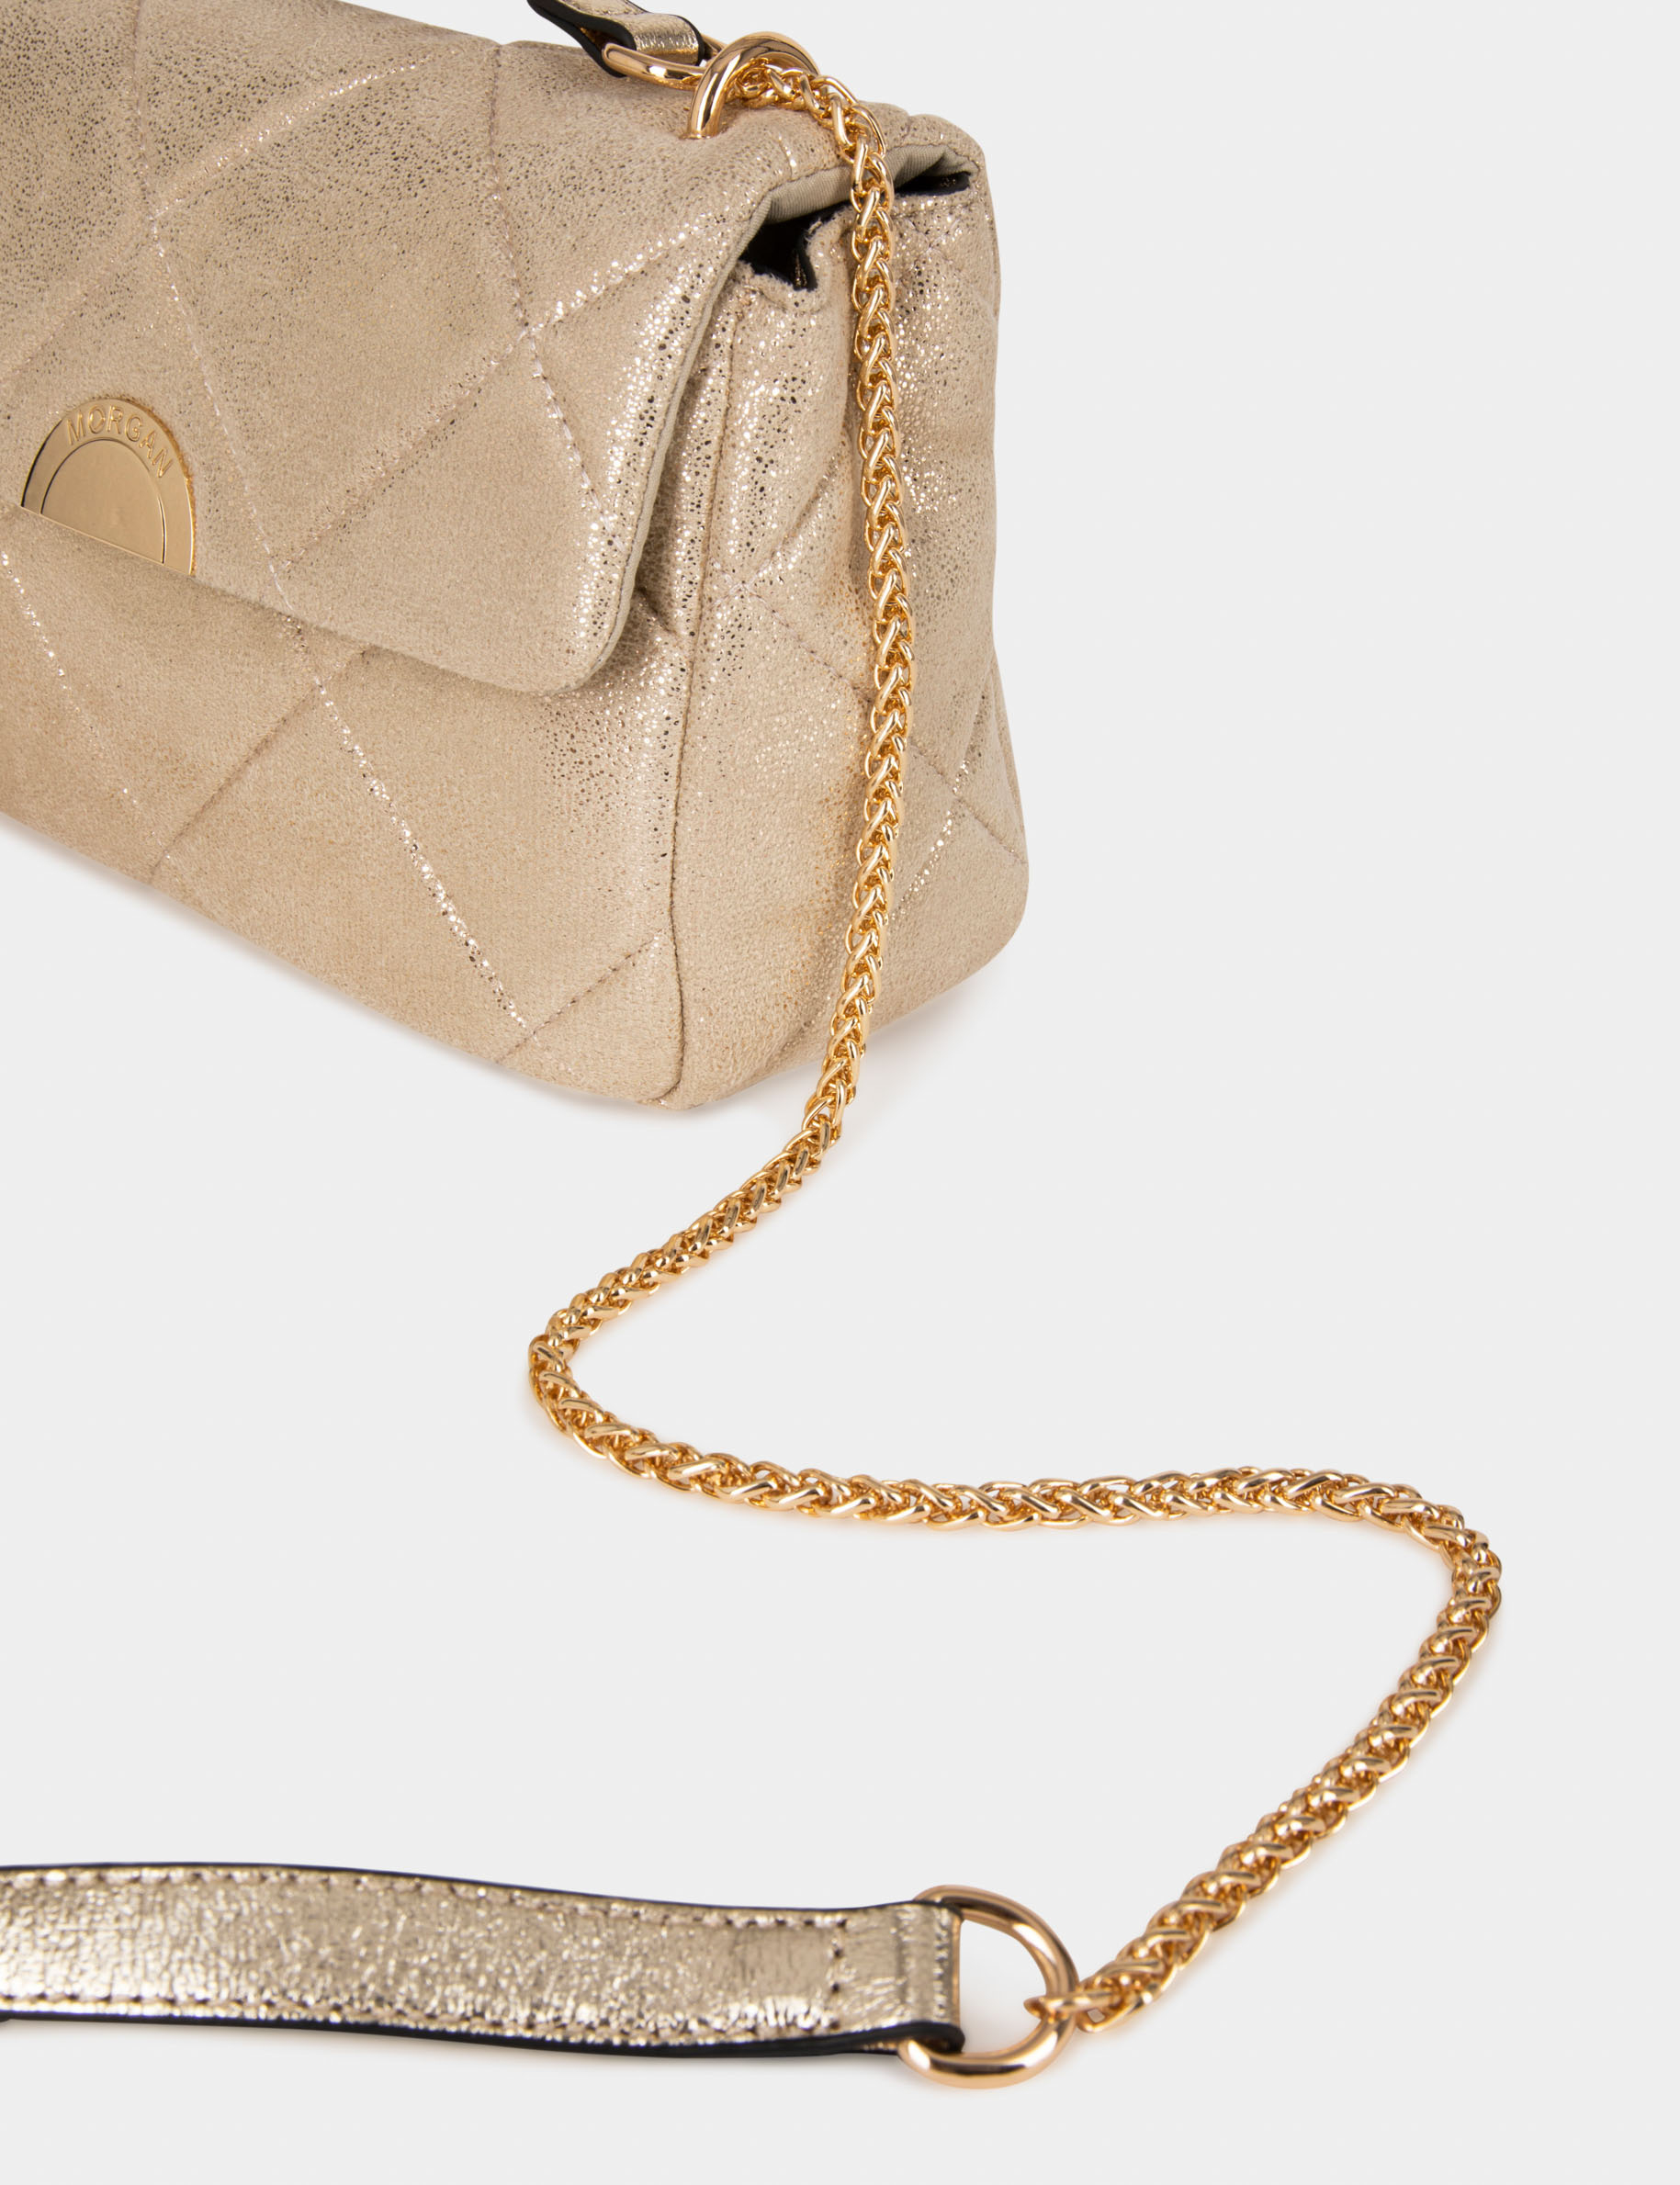 Metallised quilted clutch bag gold ladies'